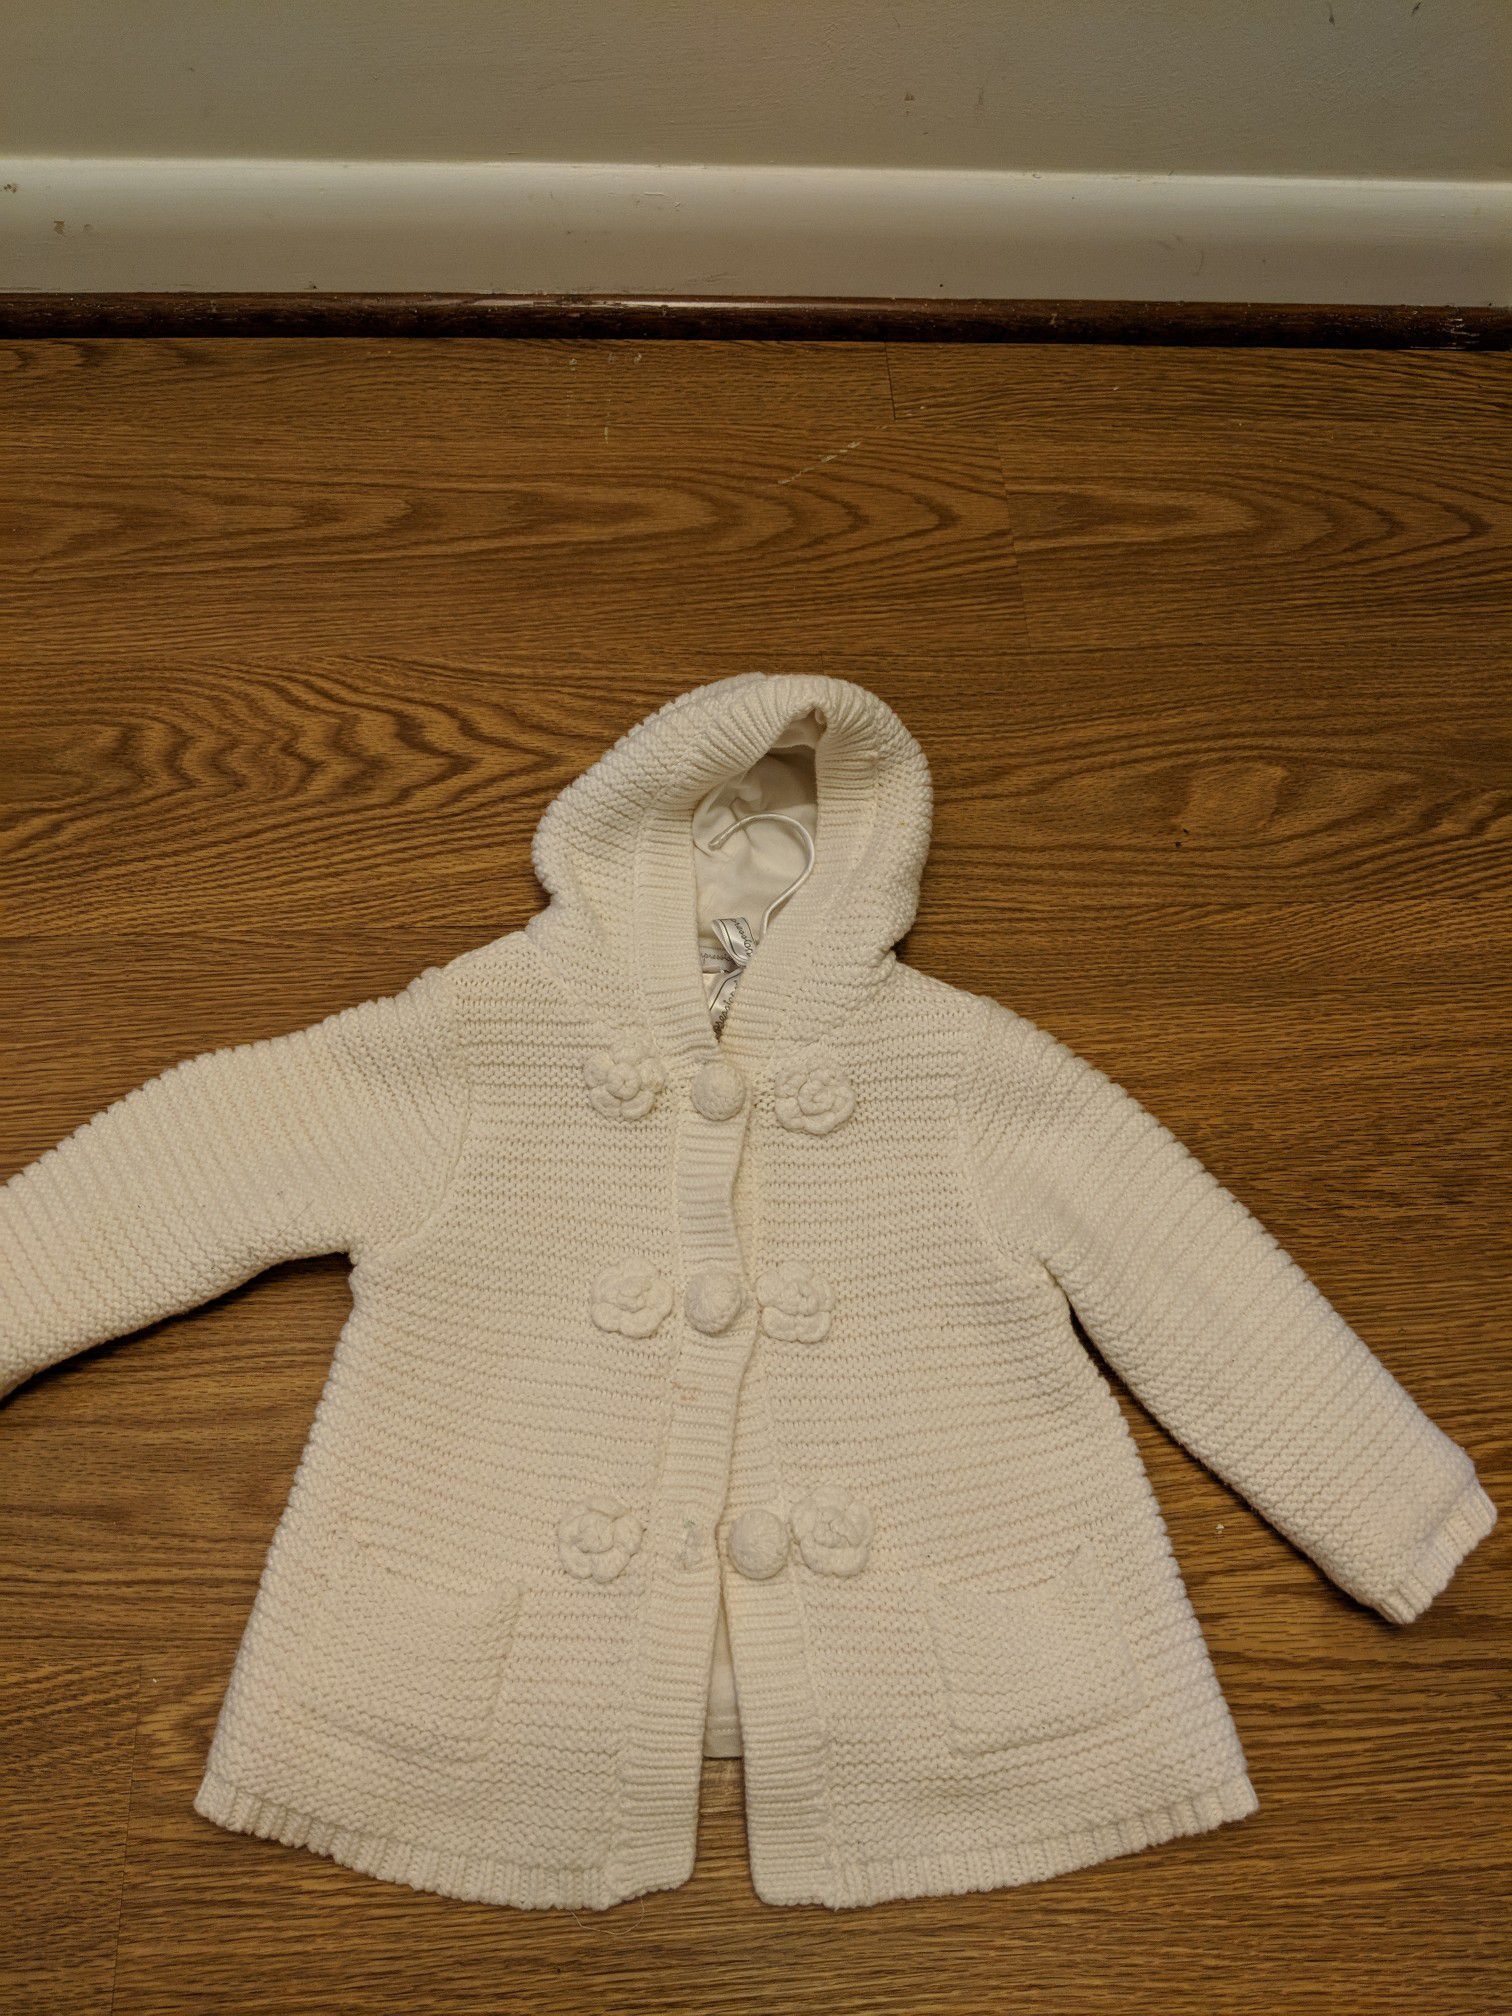 Toddler sweater jacket 24 months